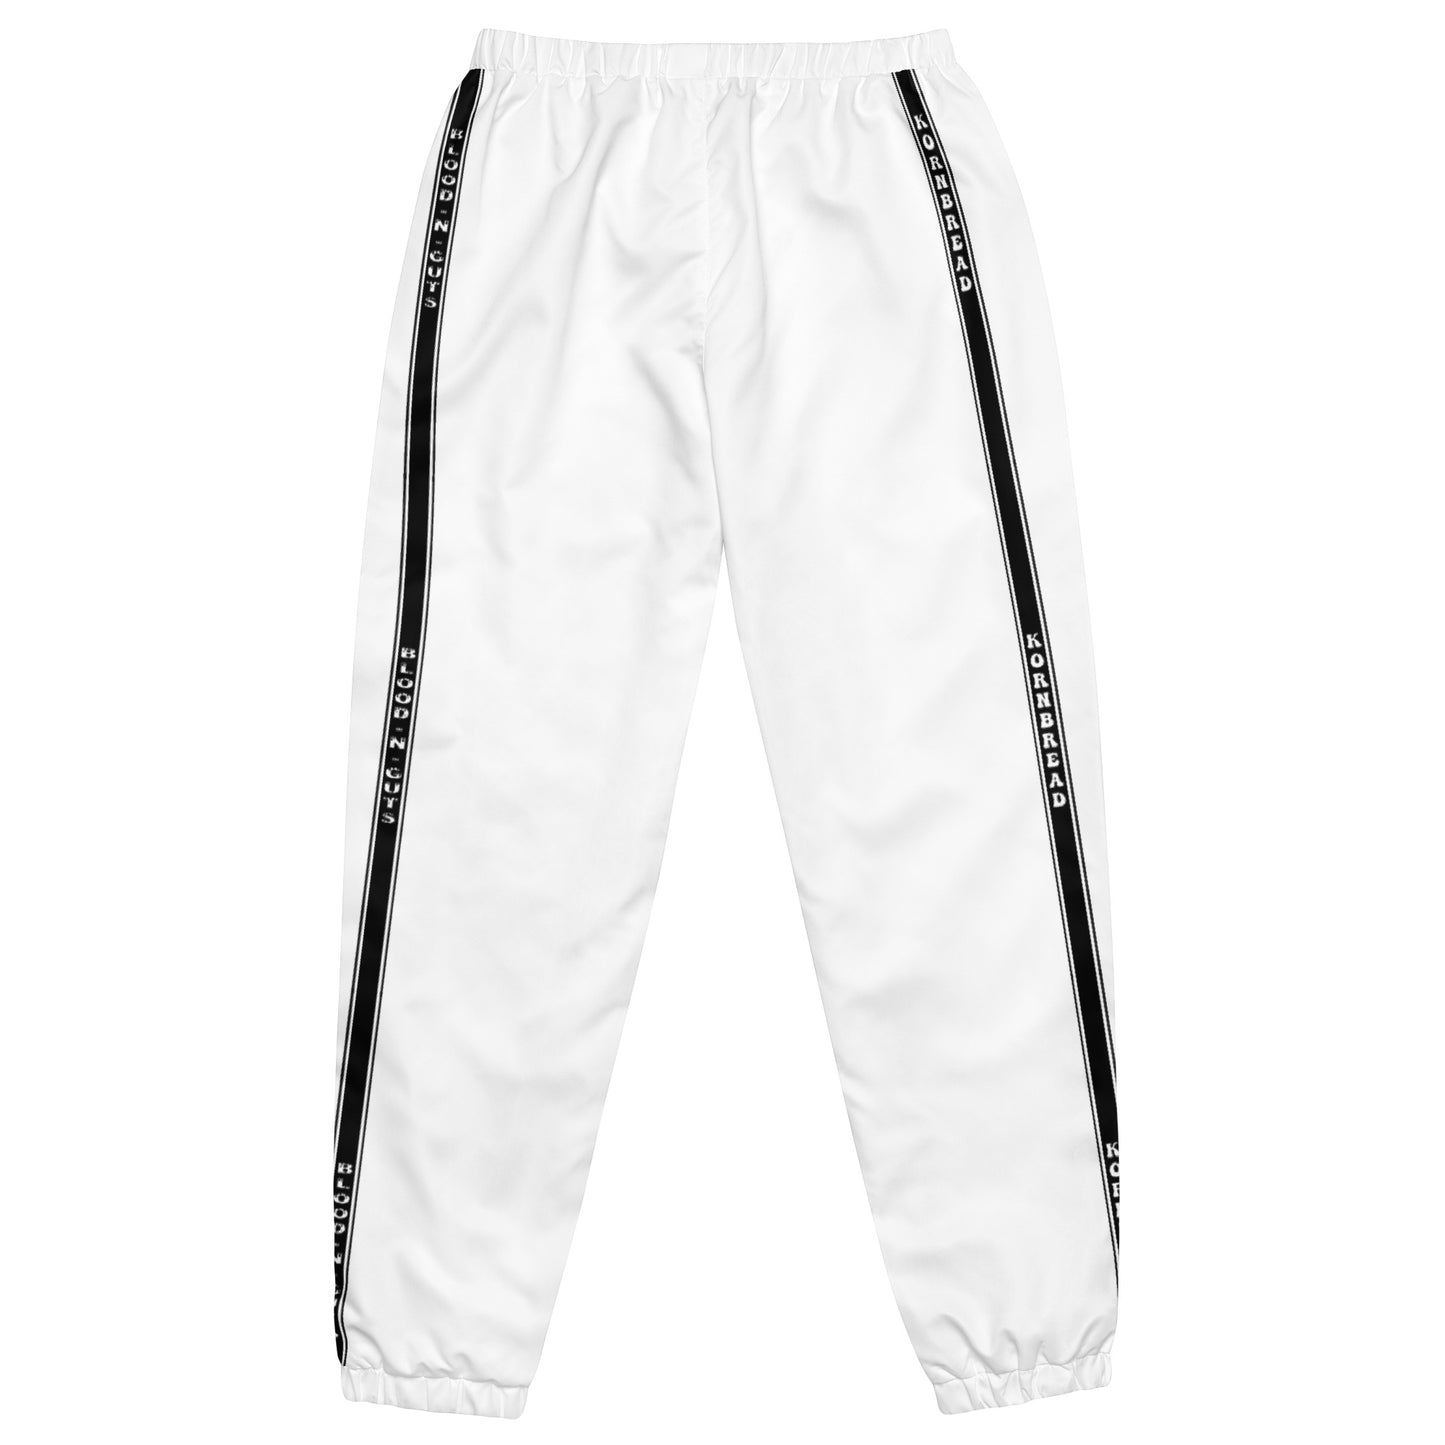 KBBNG Black Stripe Track Pants (White)